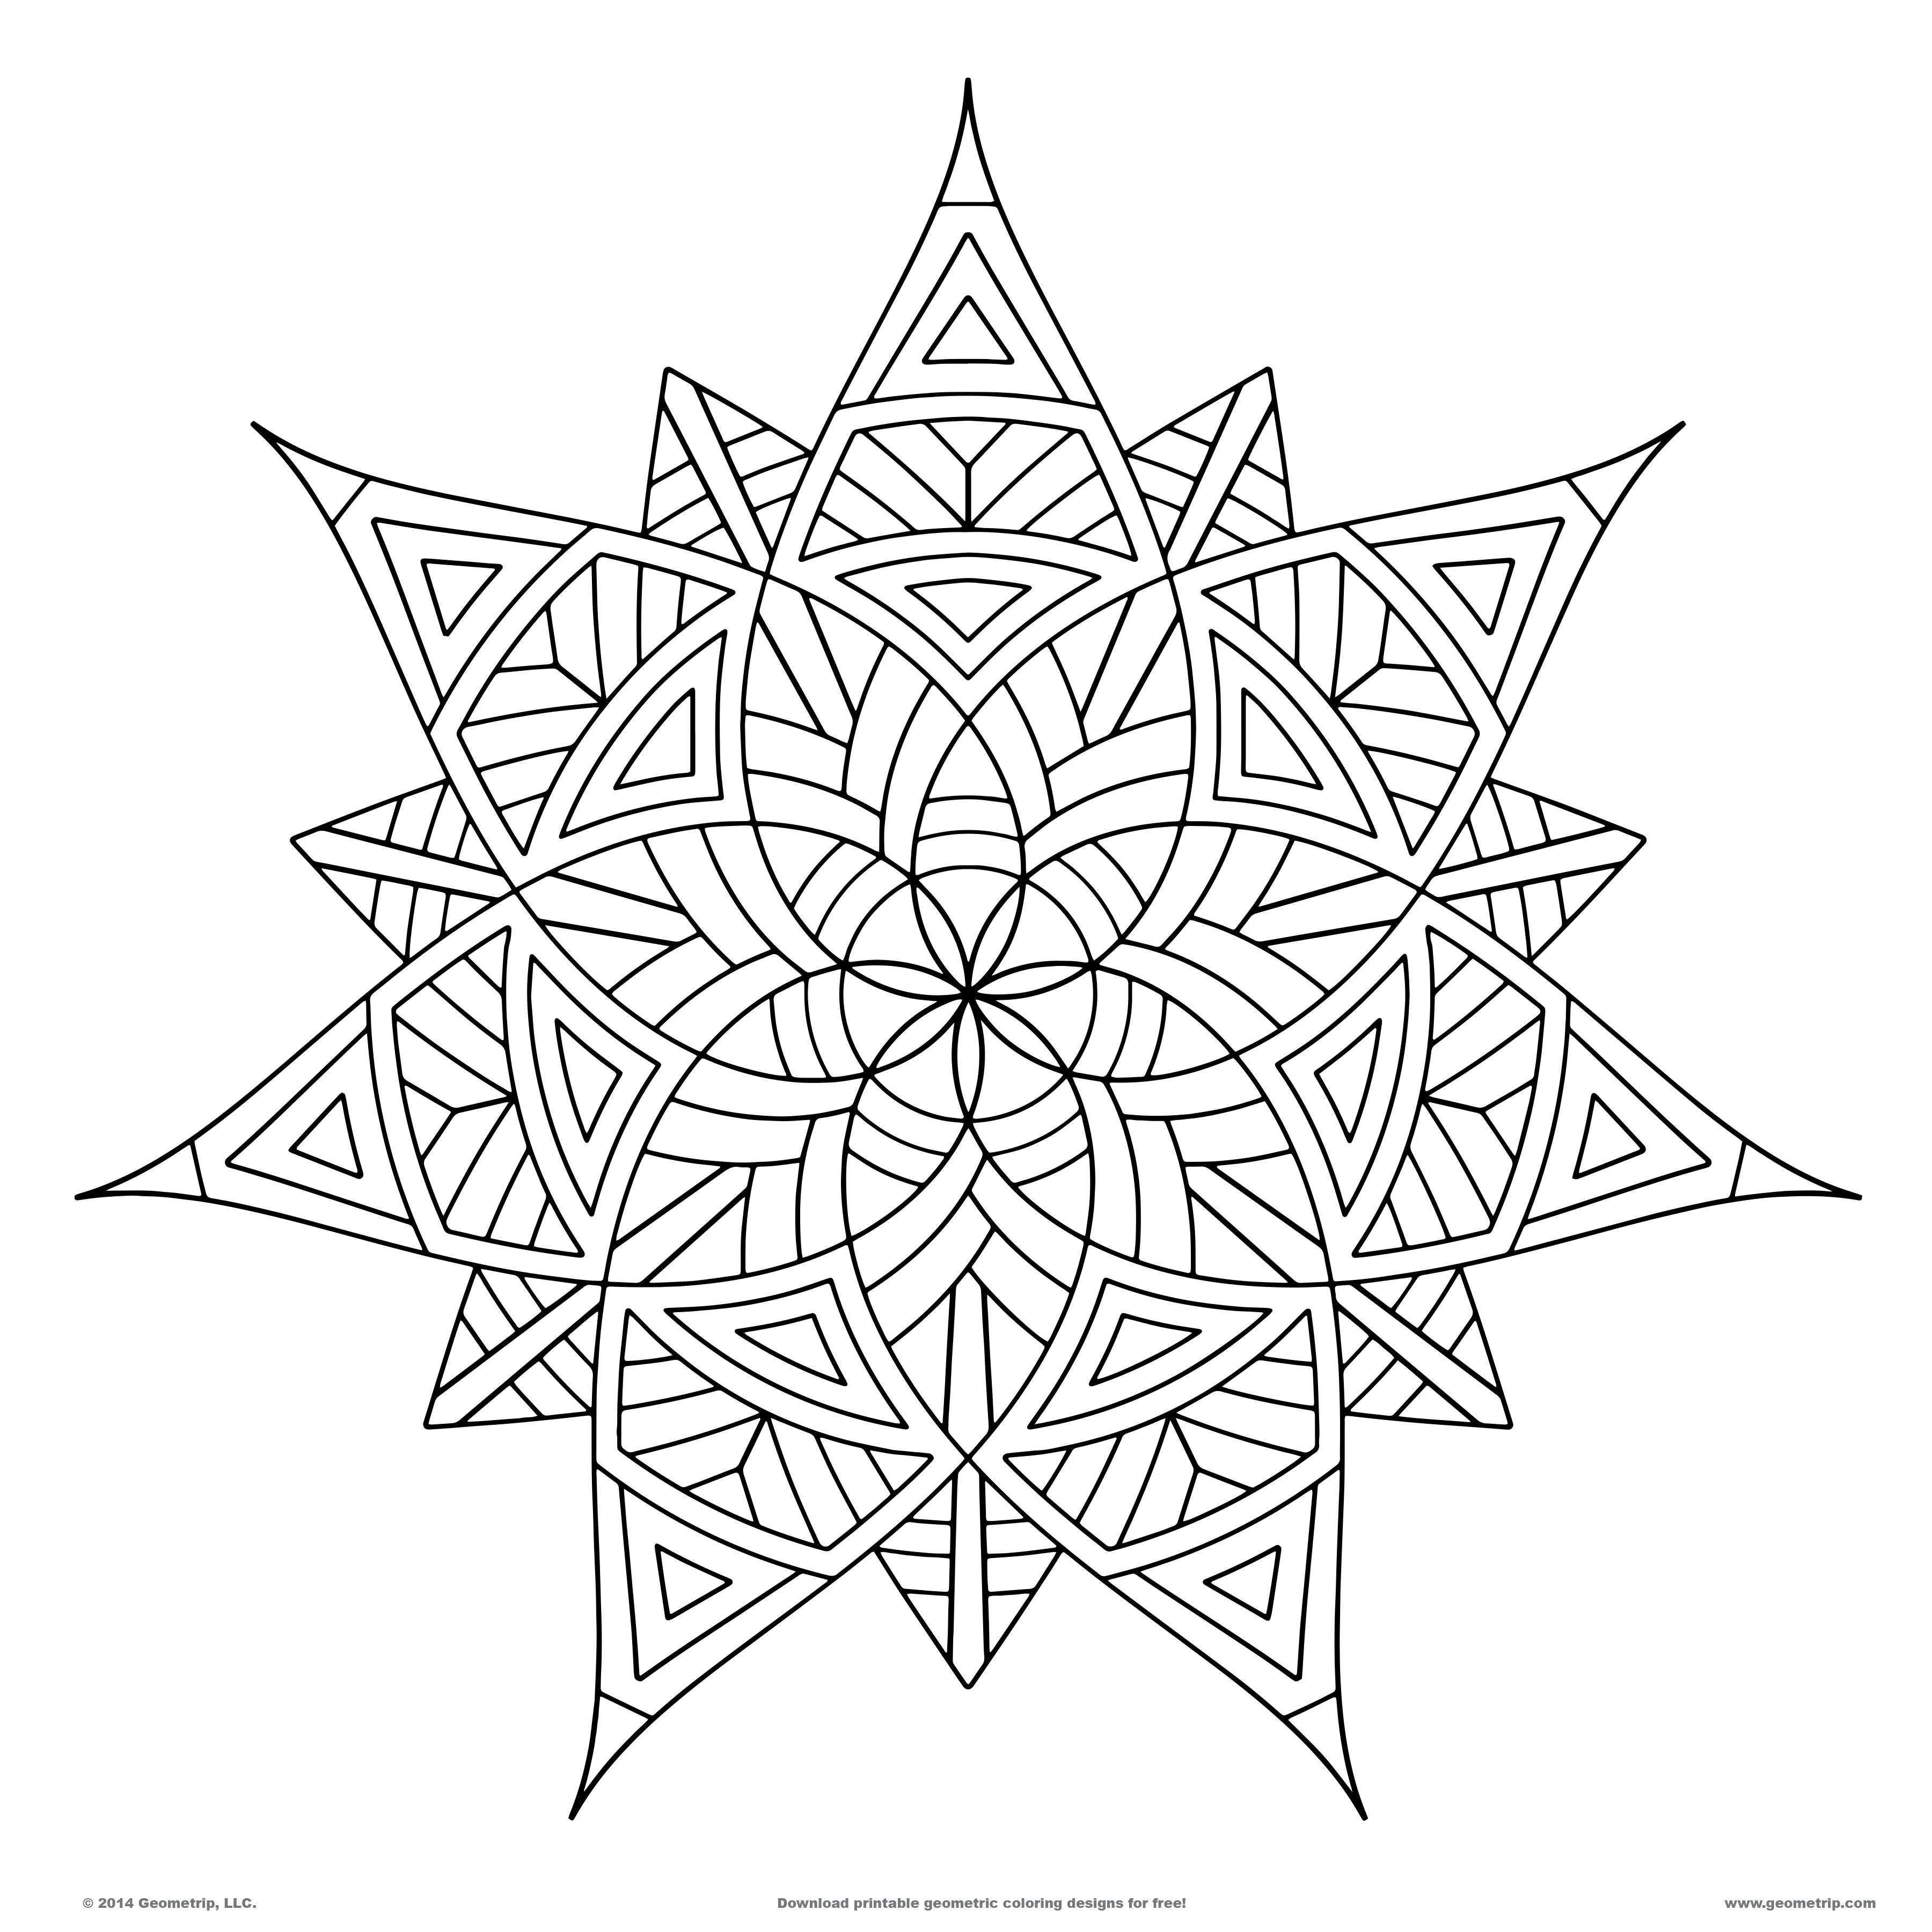 Geometry coloring #3, Download drawings